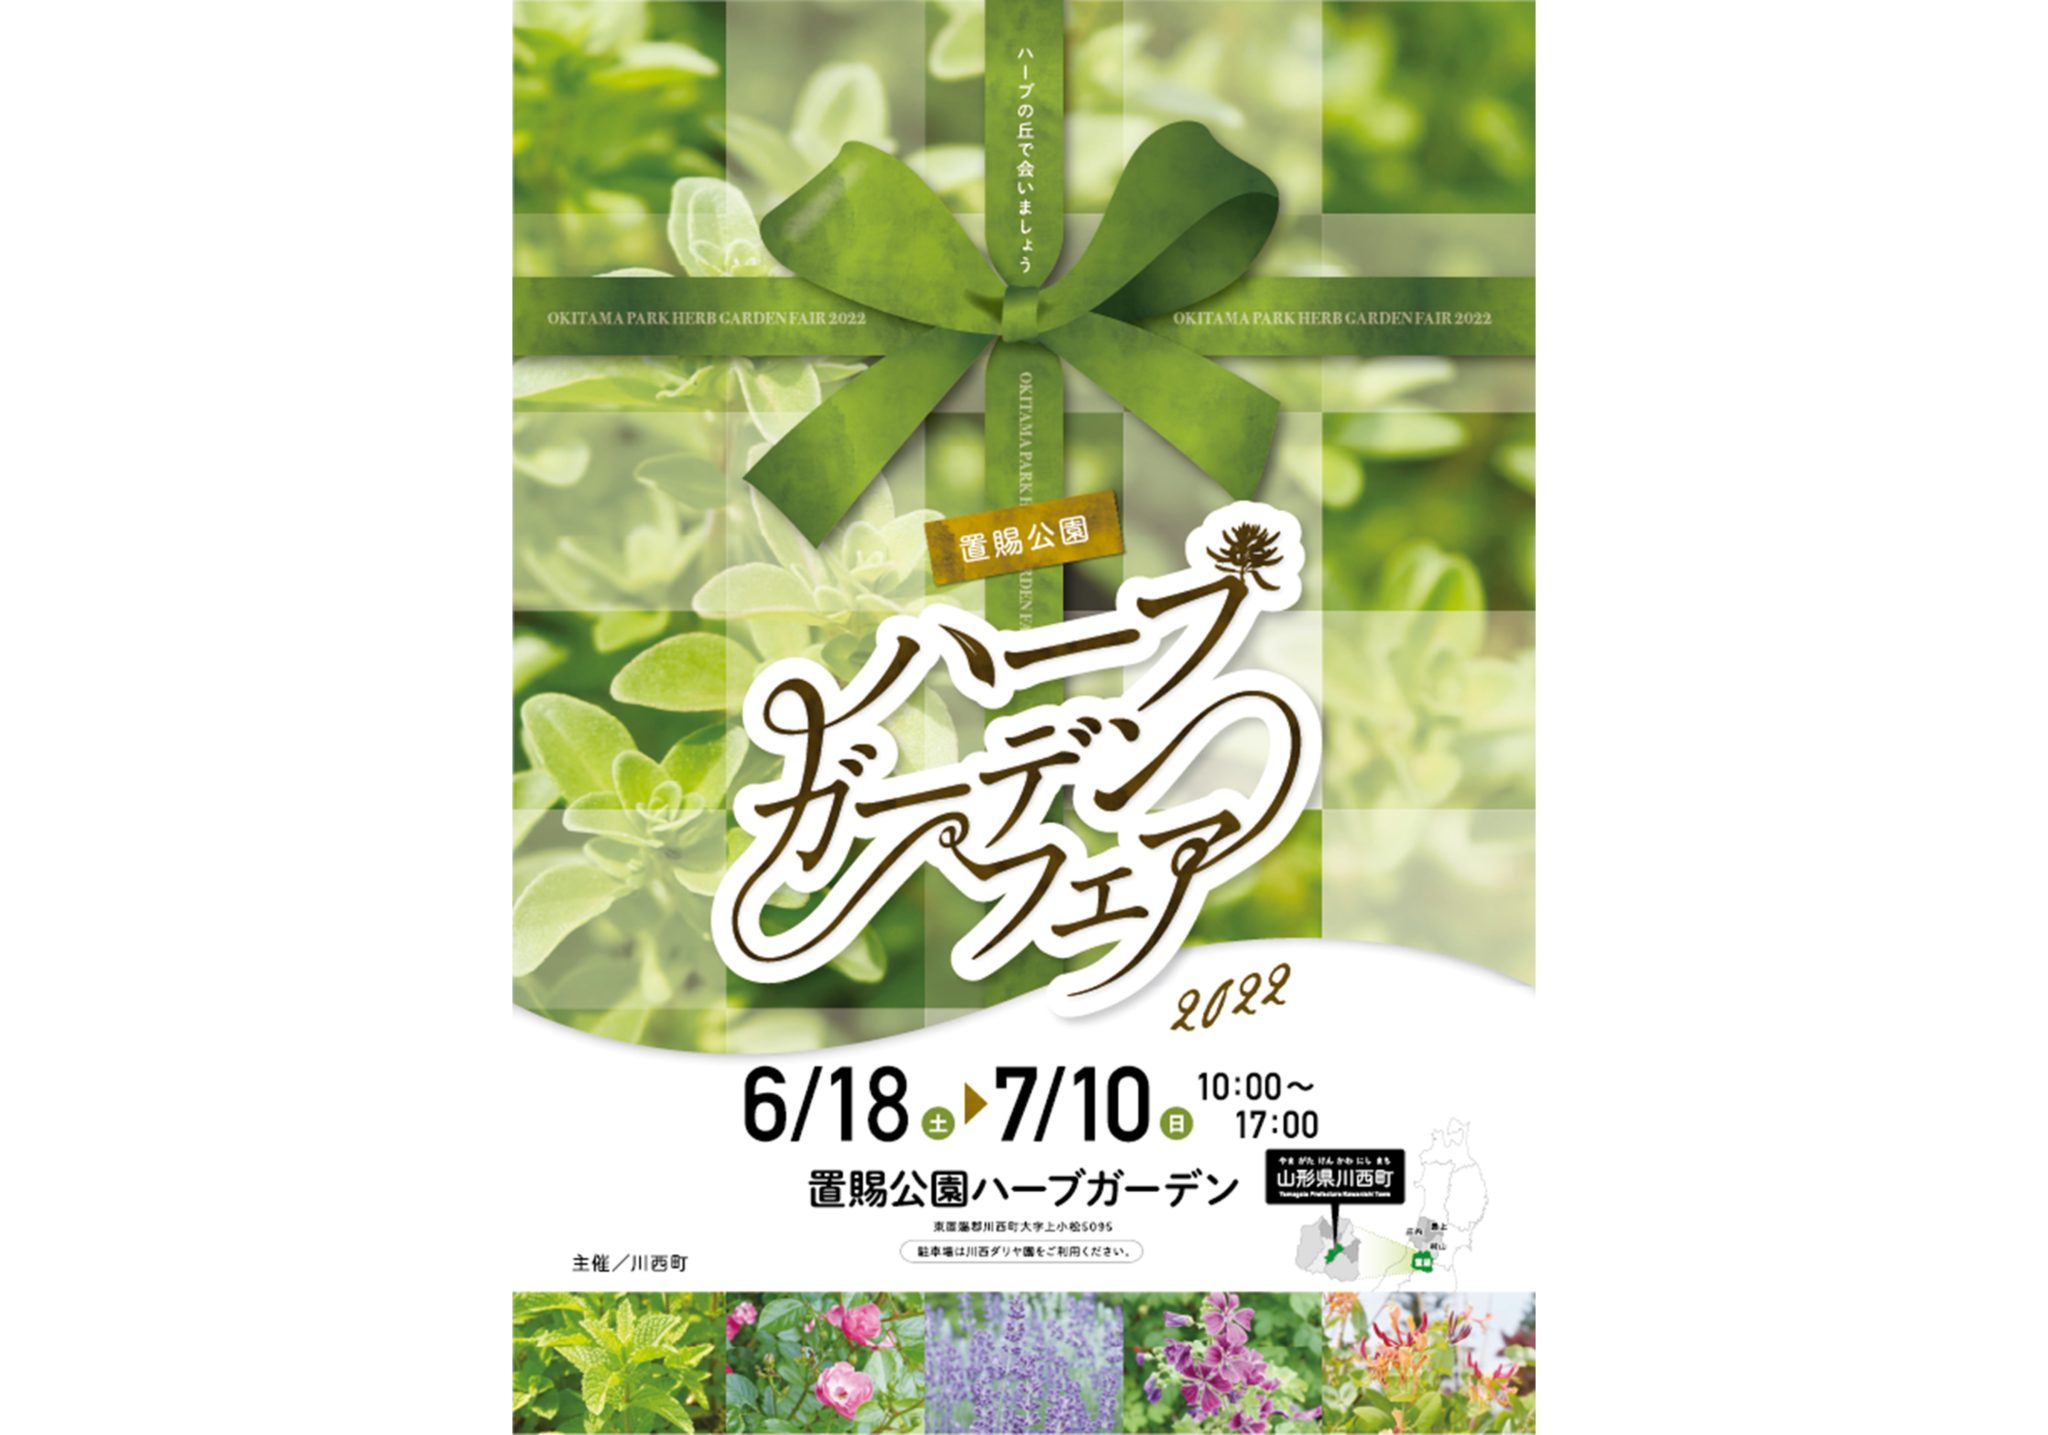 Okitama Park Herb Garden Fair 2022